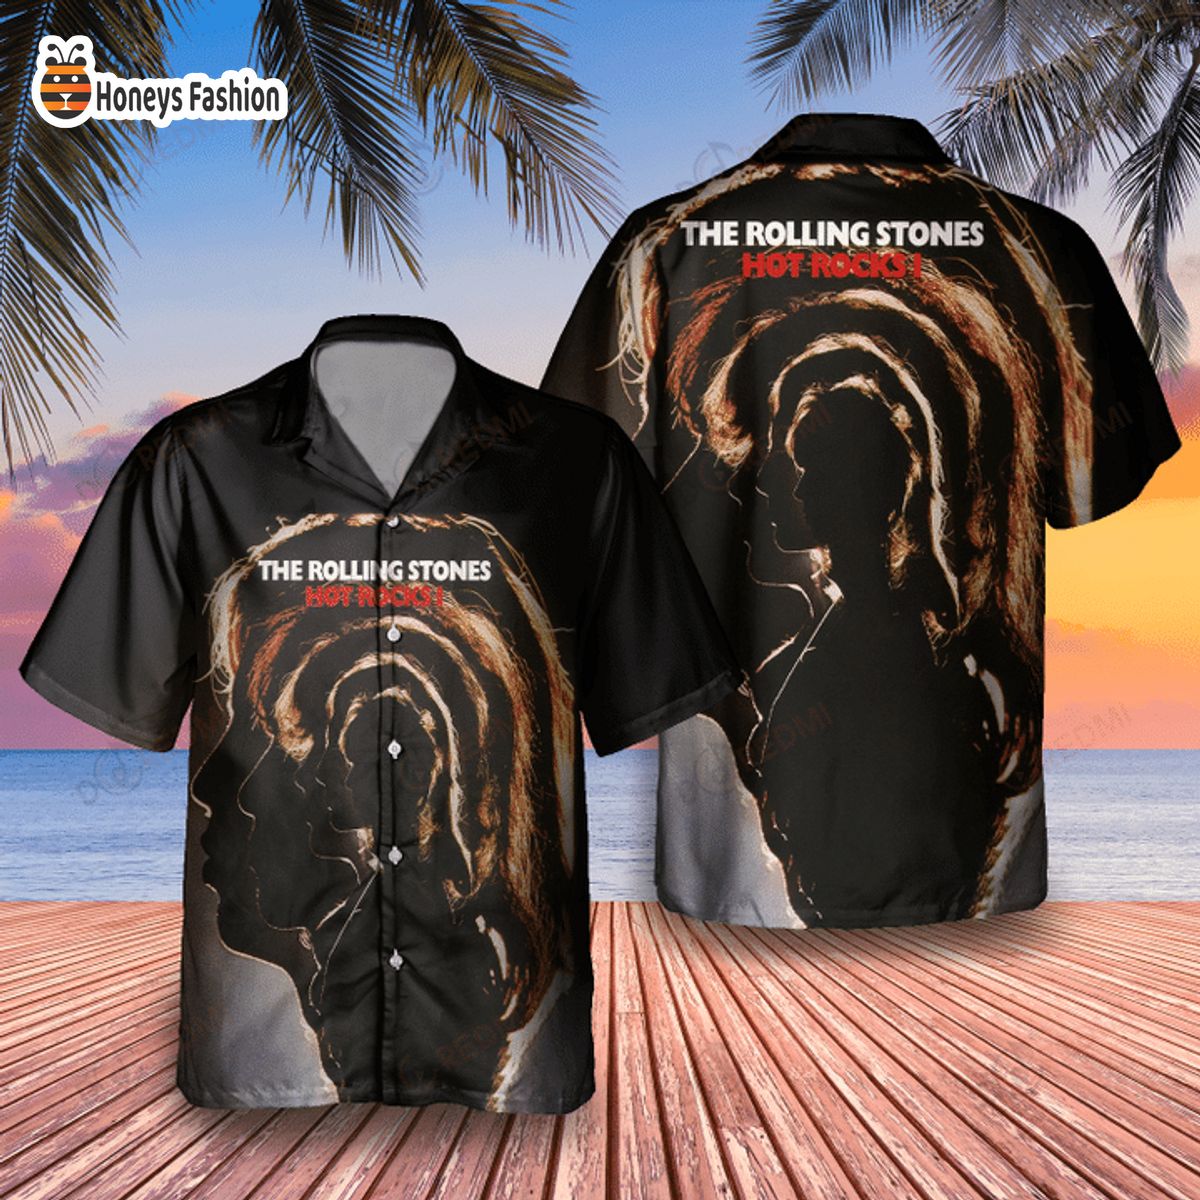 The Rolling Stones Hot Rocks 1 album cover hawaiian shirt